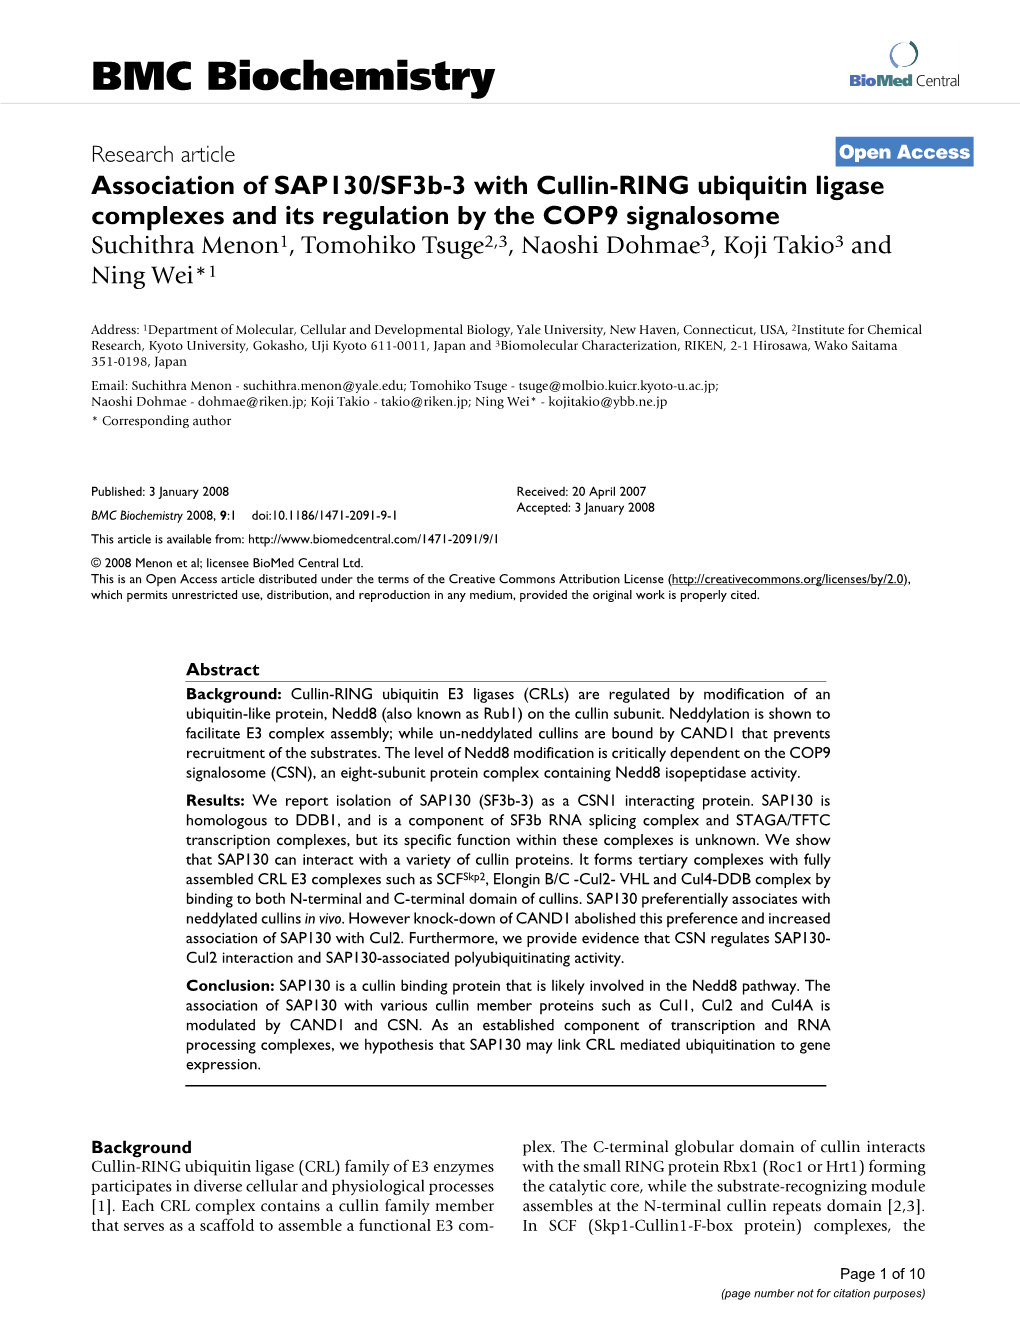 Association of SAP130/Sf3b-3 with Cullin-RING Ubiquitin Ligase